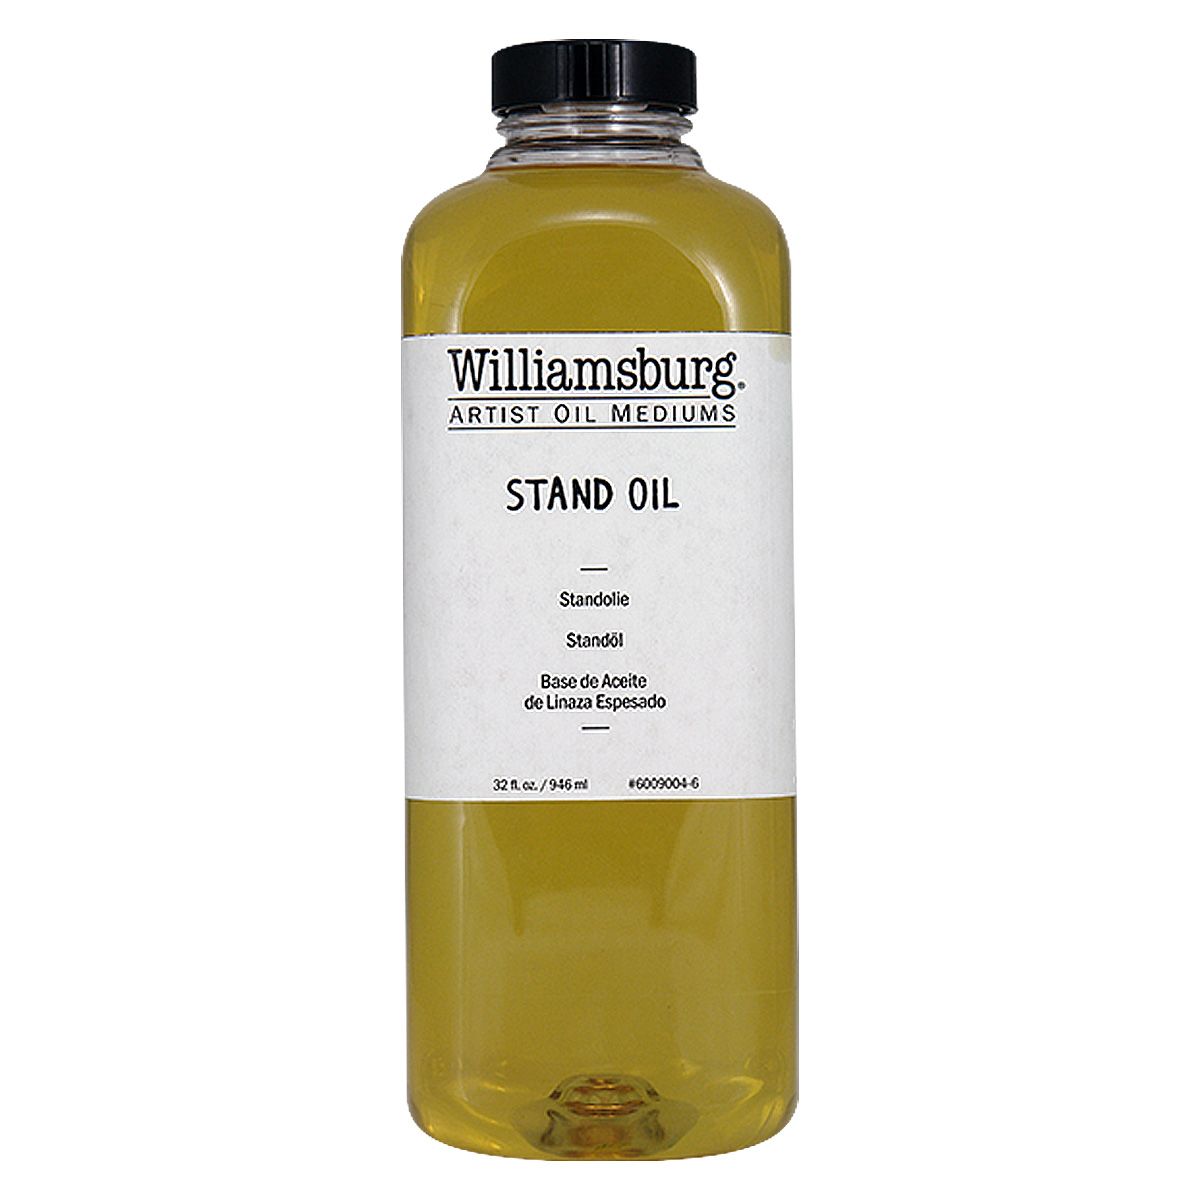 Williamsburg Stand Oil, 32oz Bottle